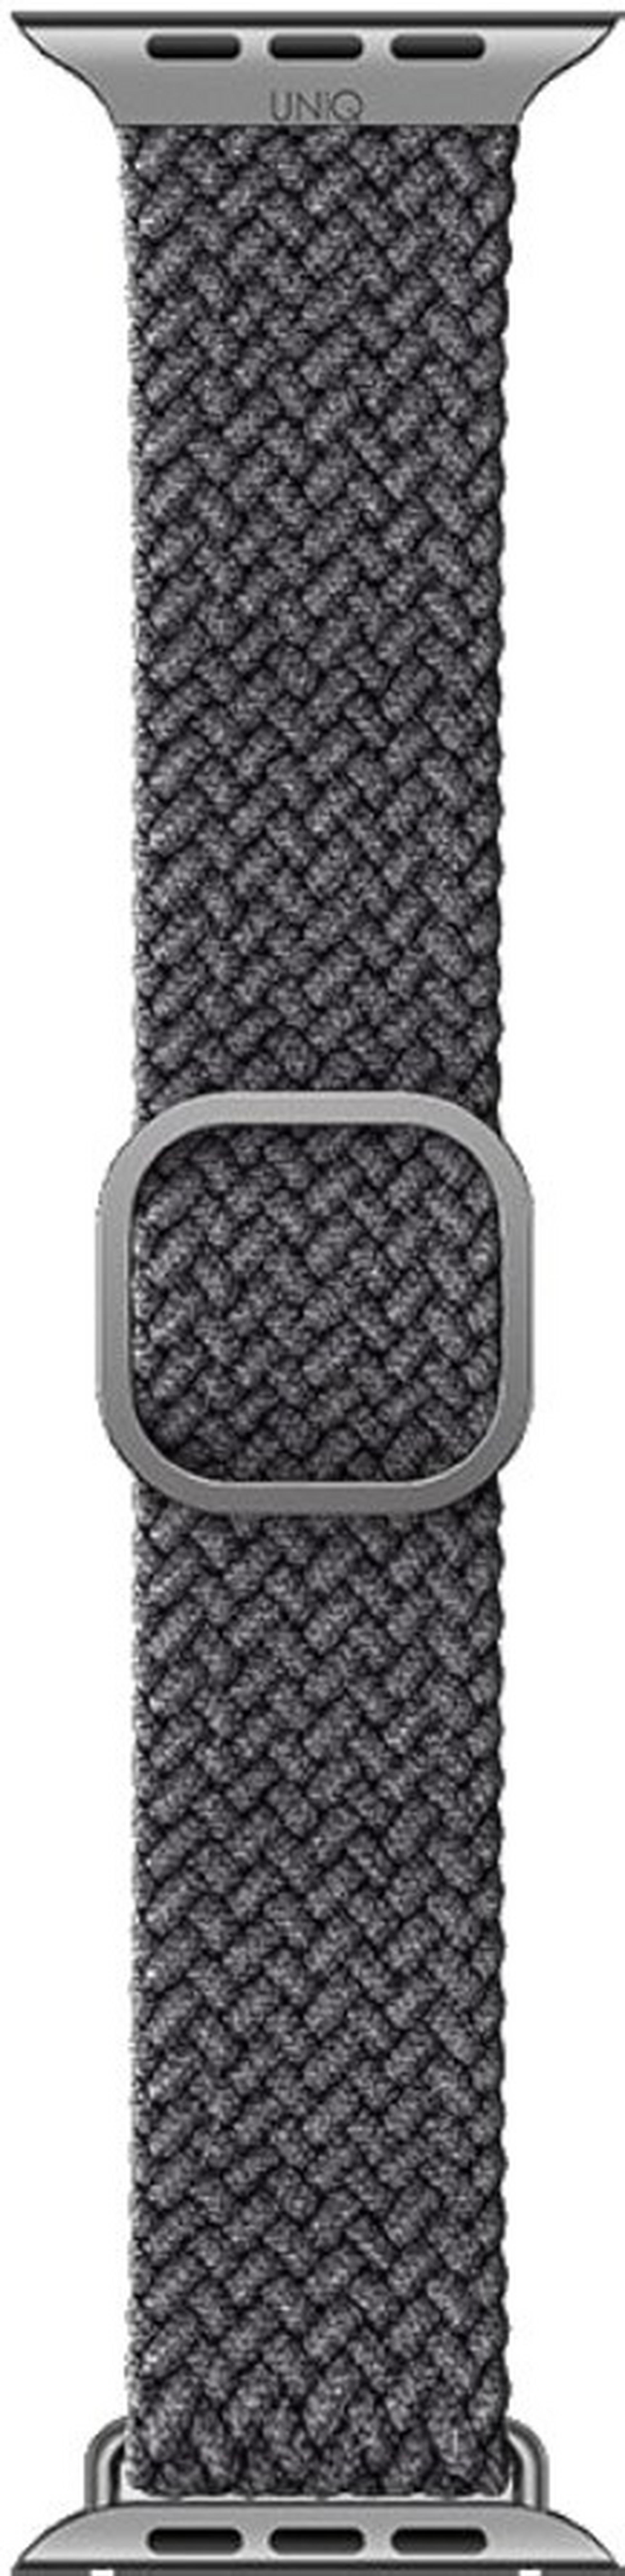 Uniq Aspen Apple Watch Strap 40/38mm - Grey